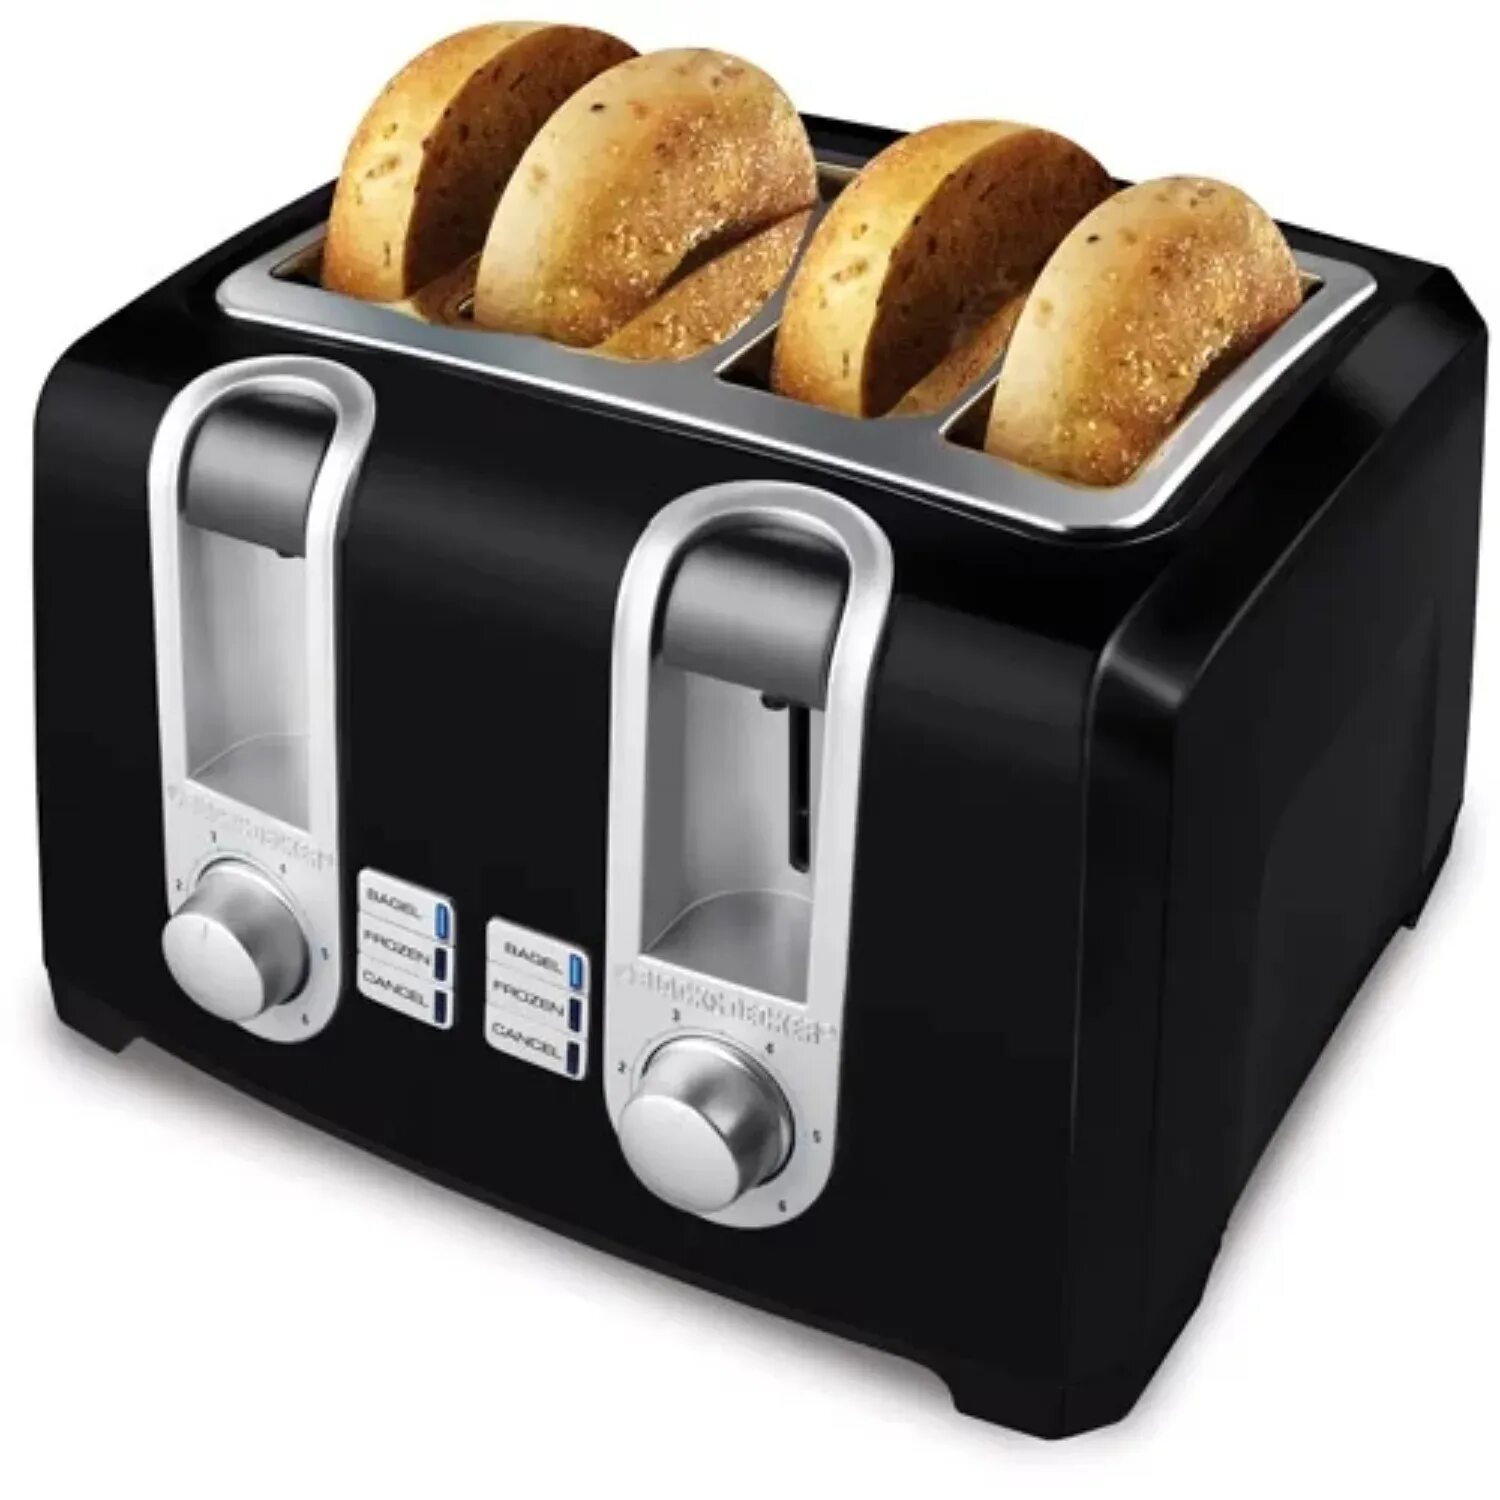 Тостер at2579. 1400w Black 4 Slice cool Touch Toaster. Тостер Black Toast. Тостер для булочек. Тостер для хлеба купить